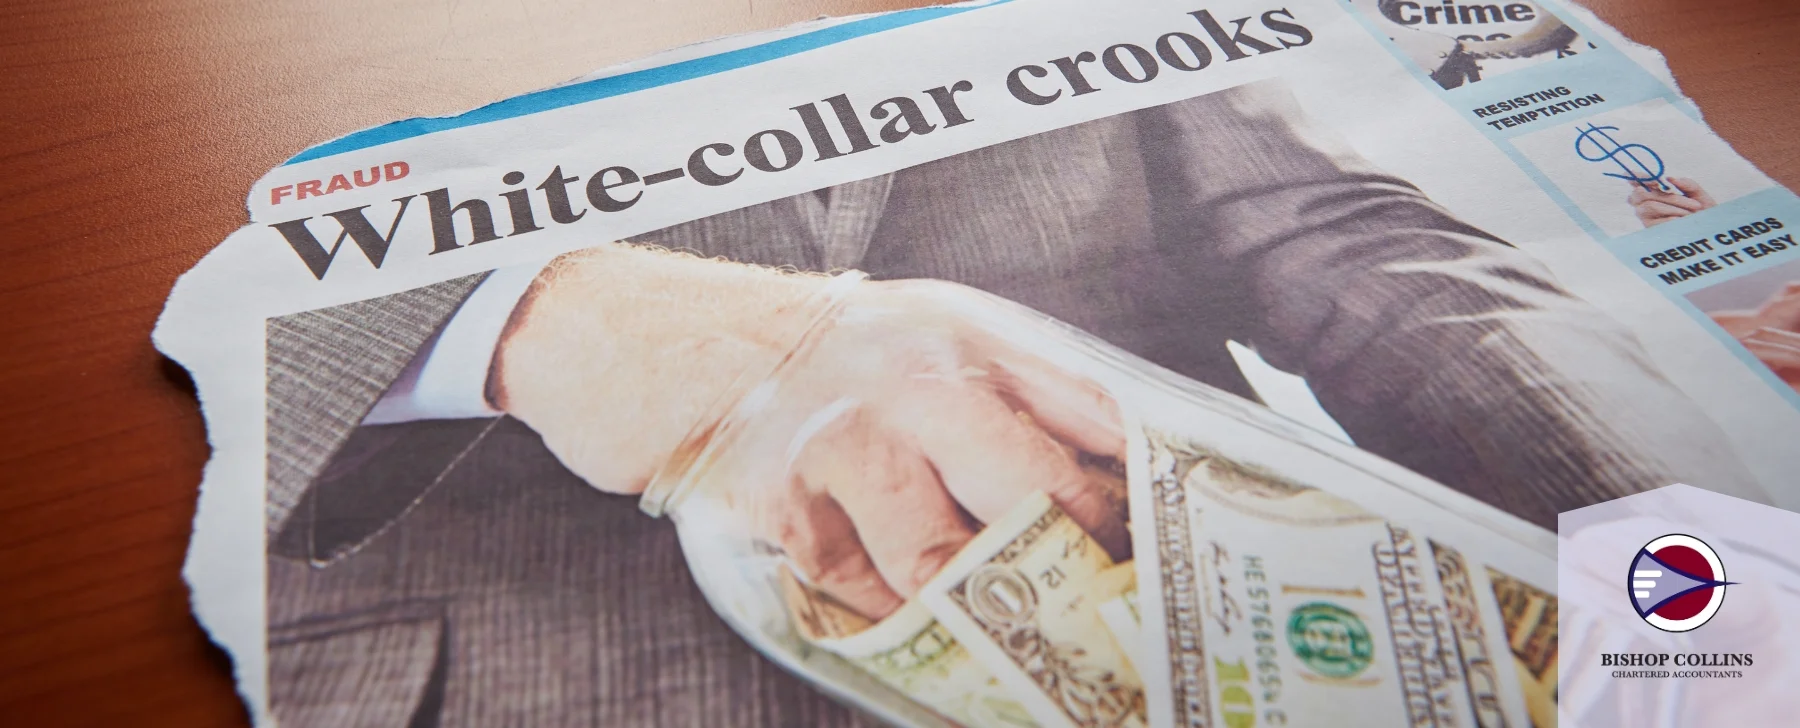 newspaper with the headline white collar crooks